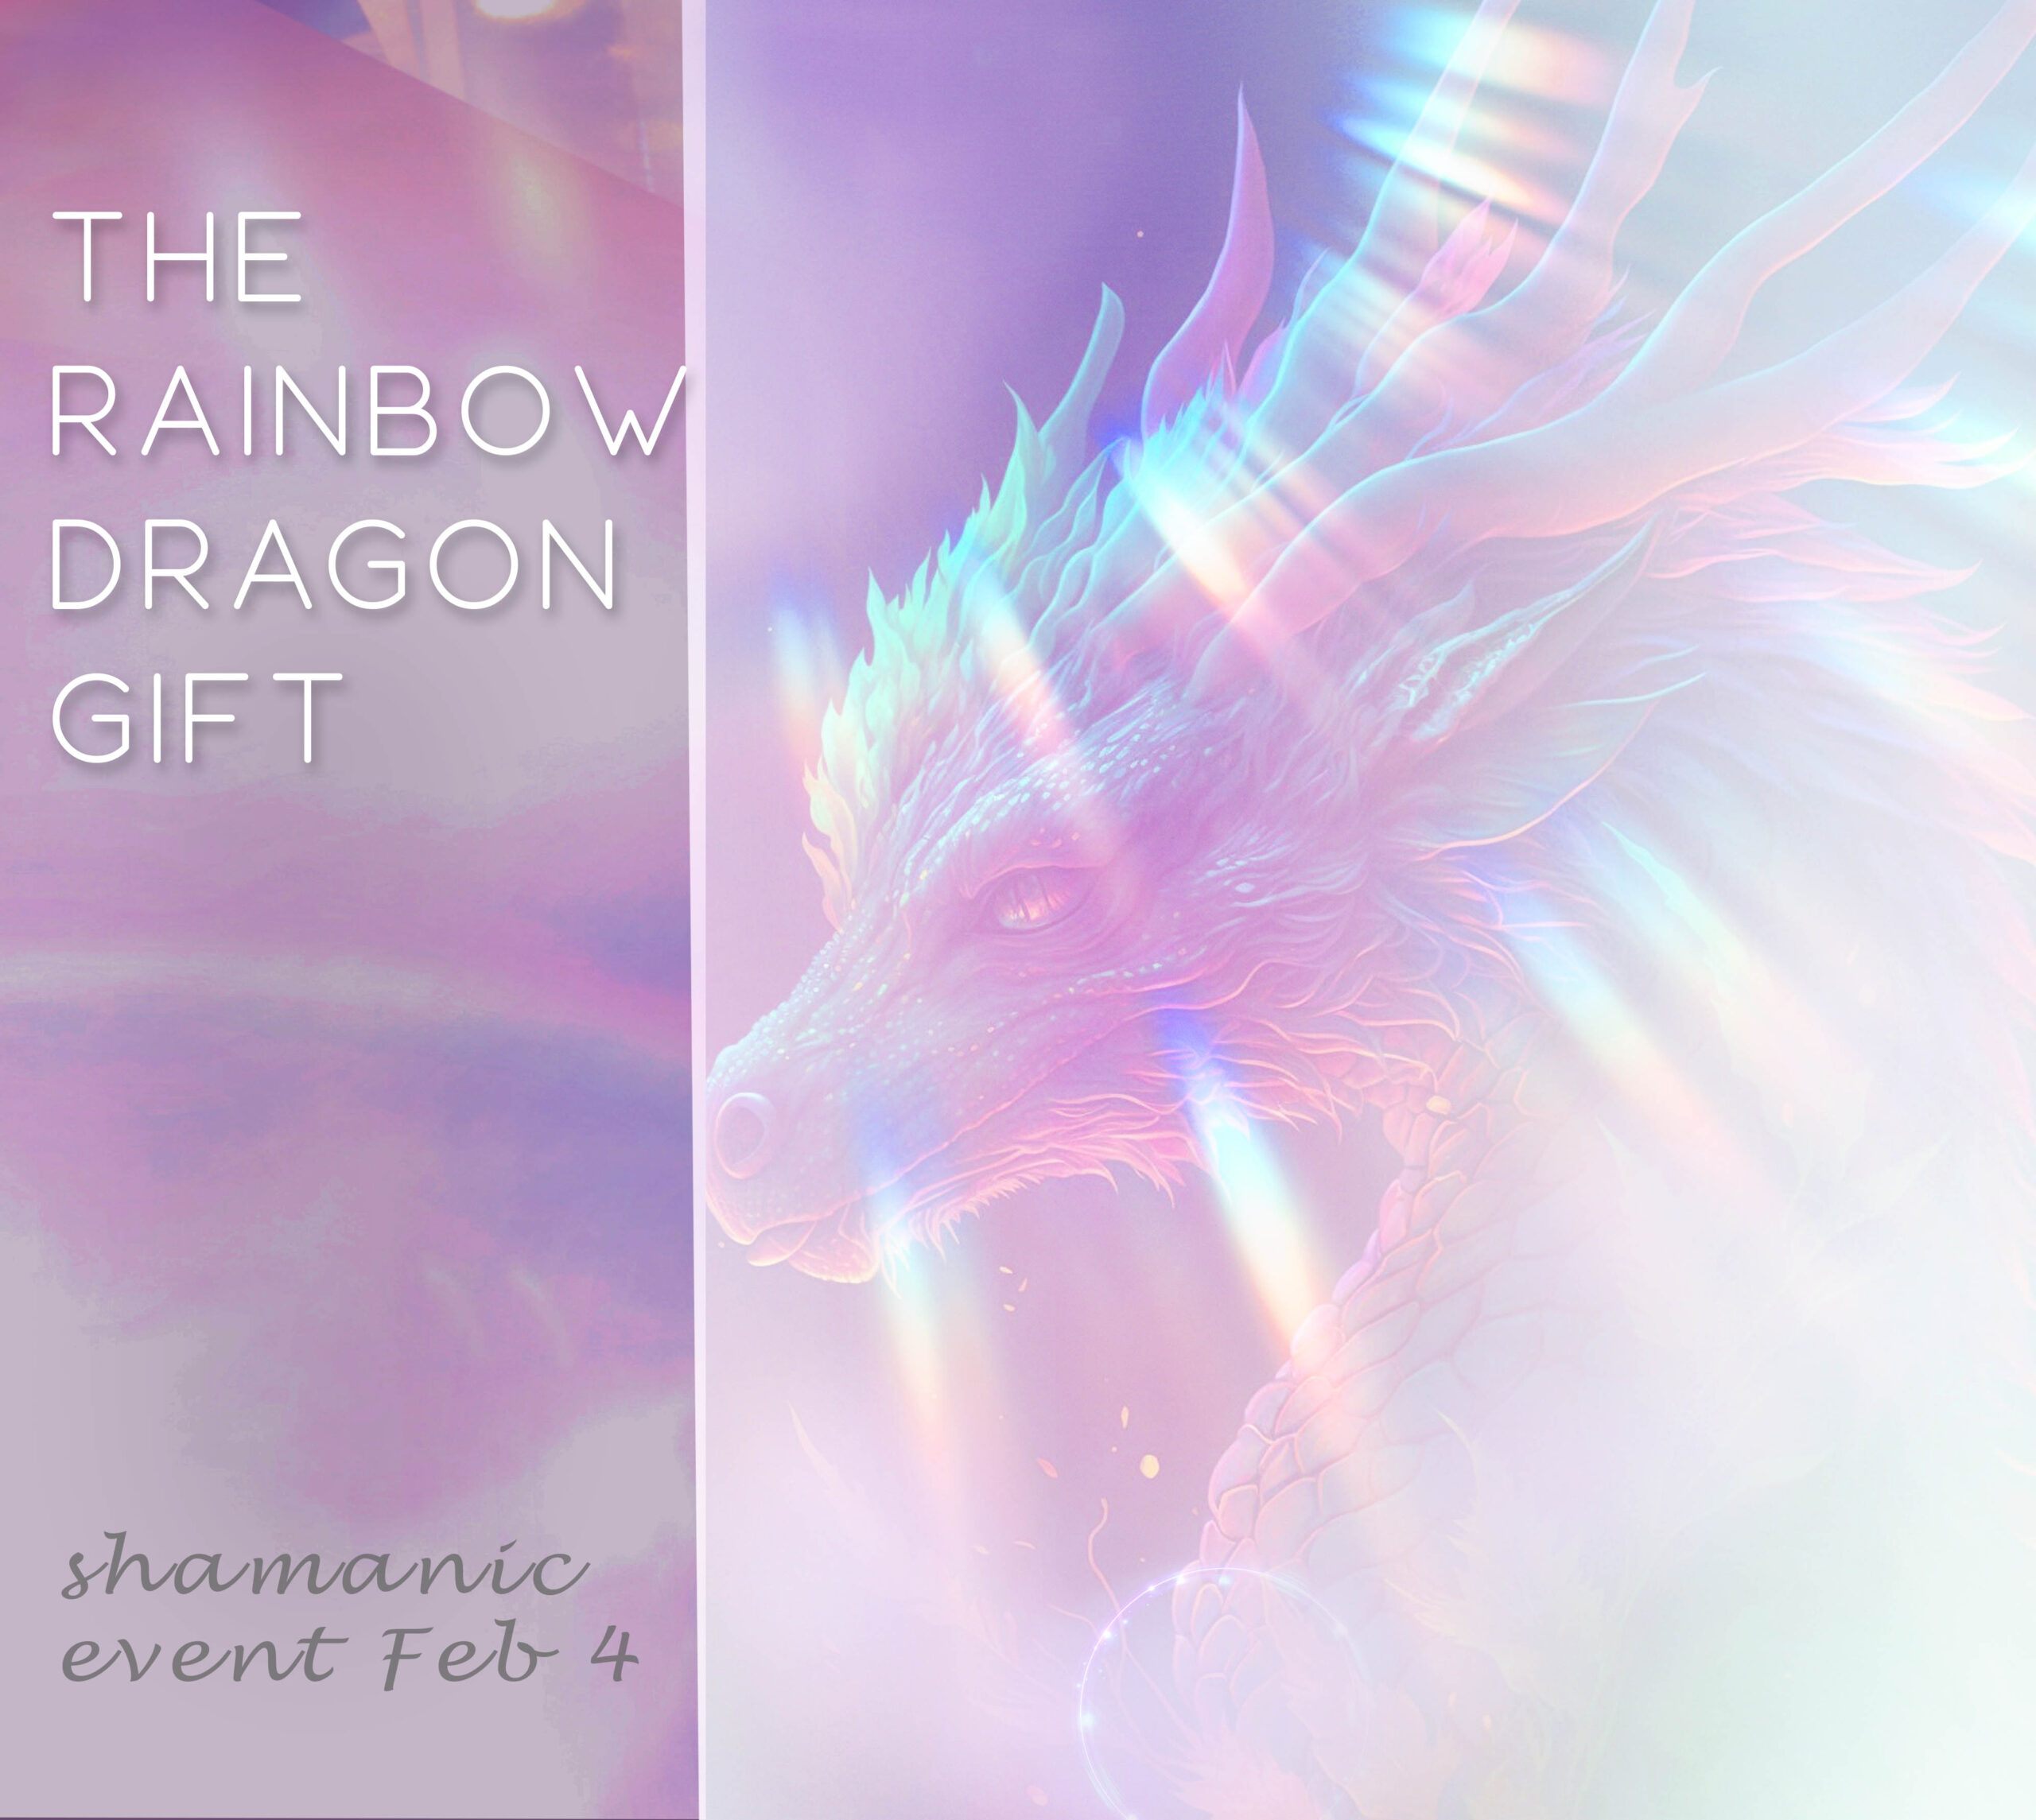 THE RAINBOW DRAGON GIFT-webinar event